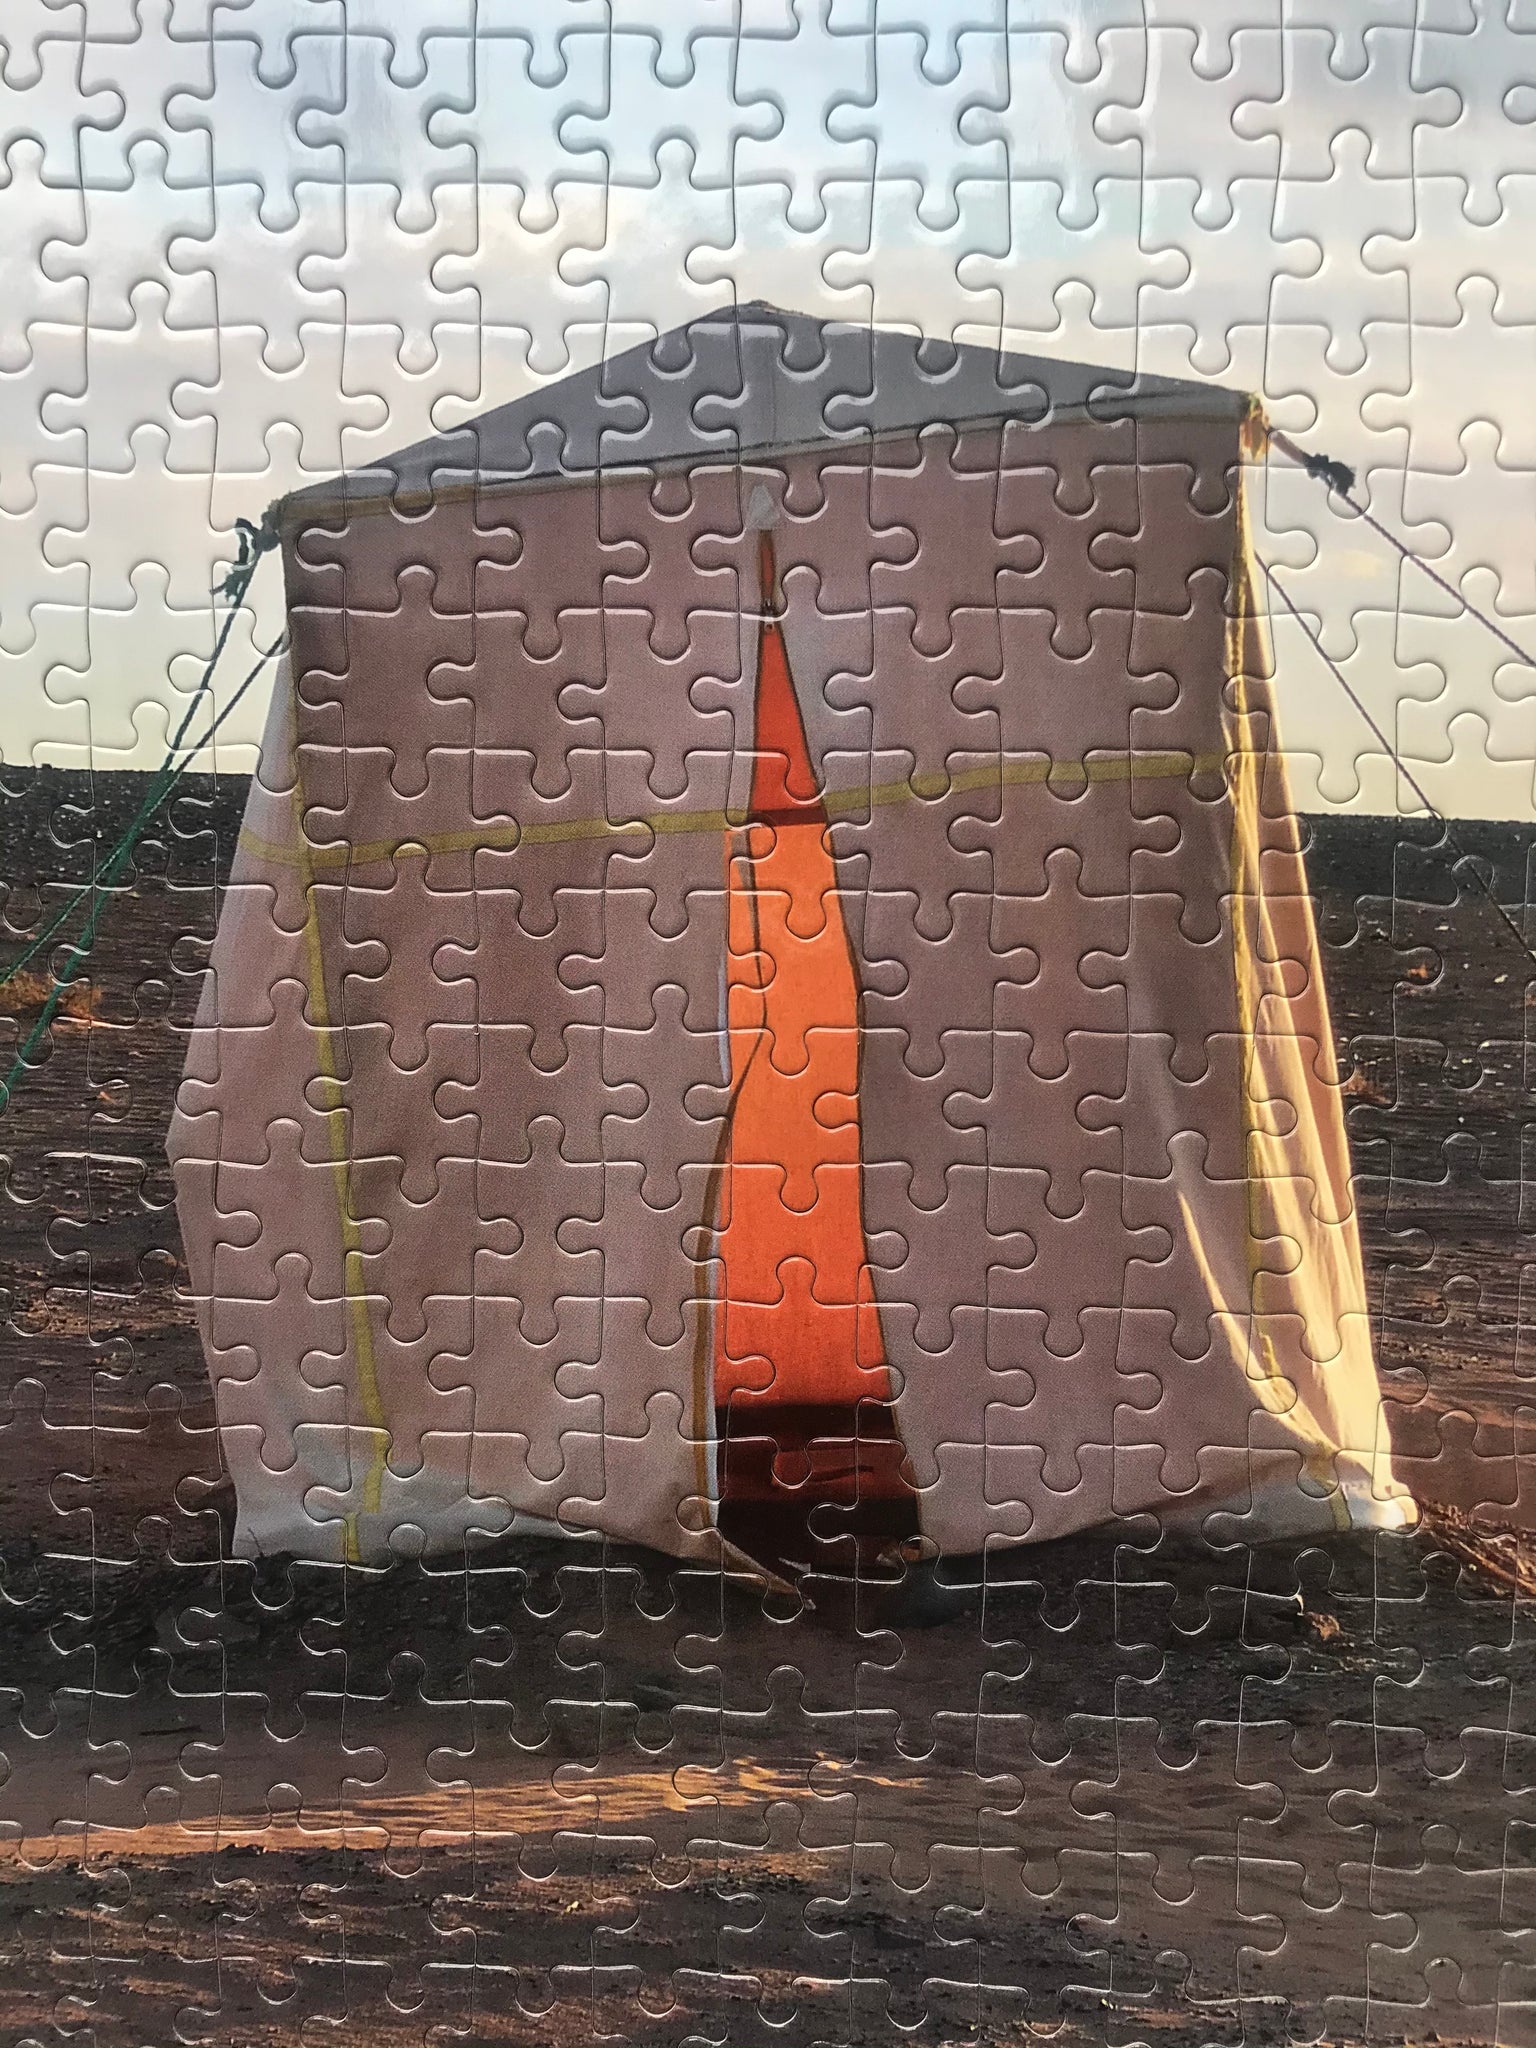 Artist Stephen Posen Collector Edition Jigsaw Puzzle